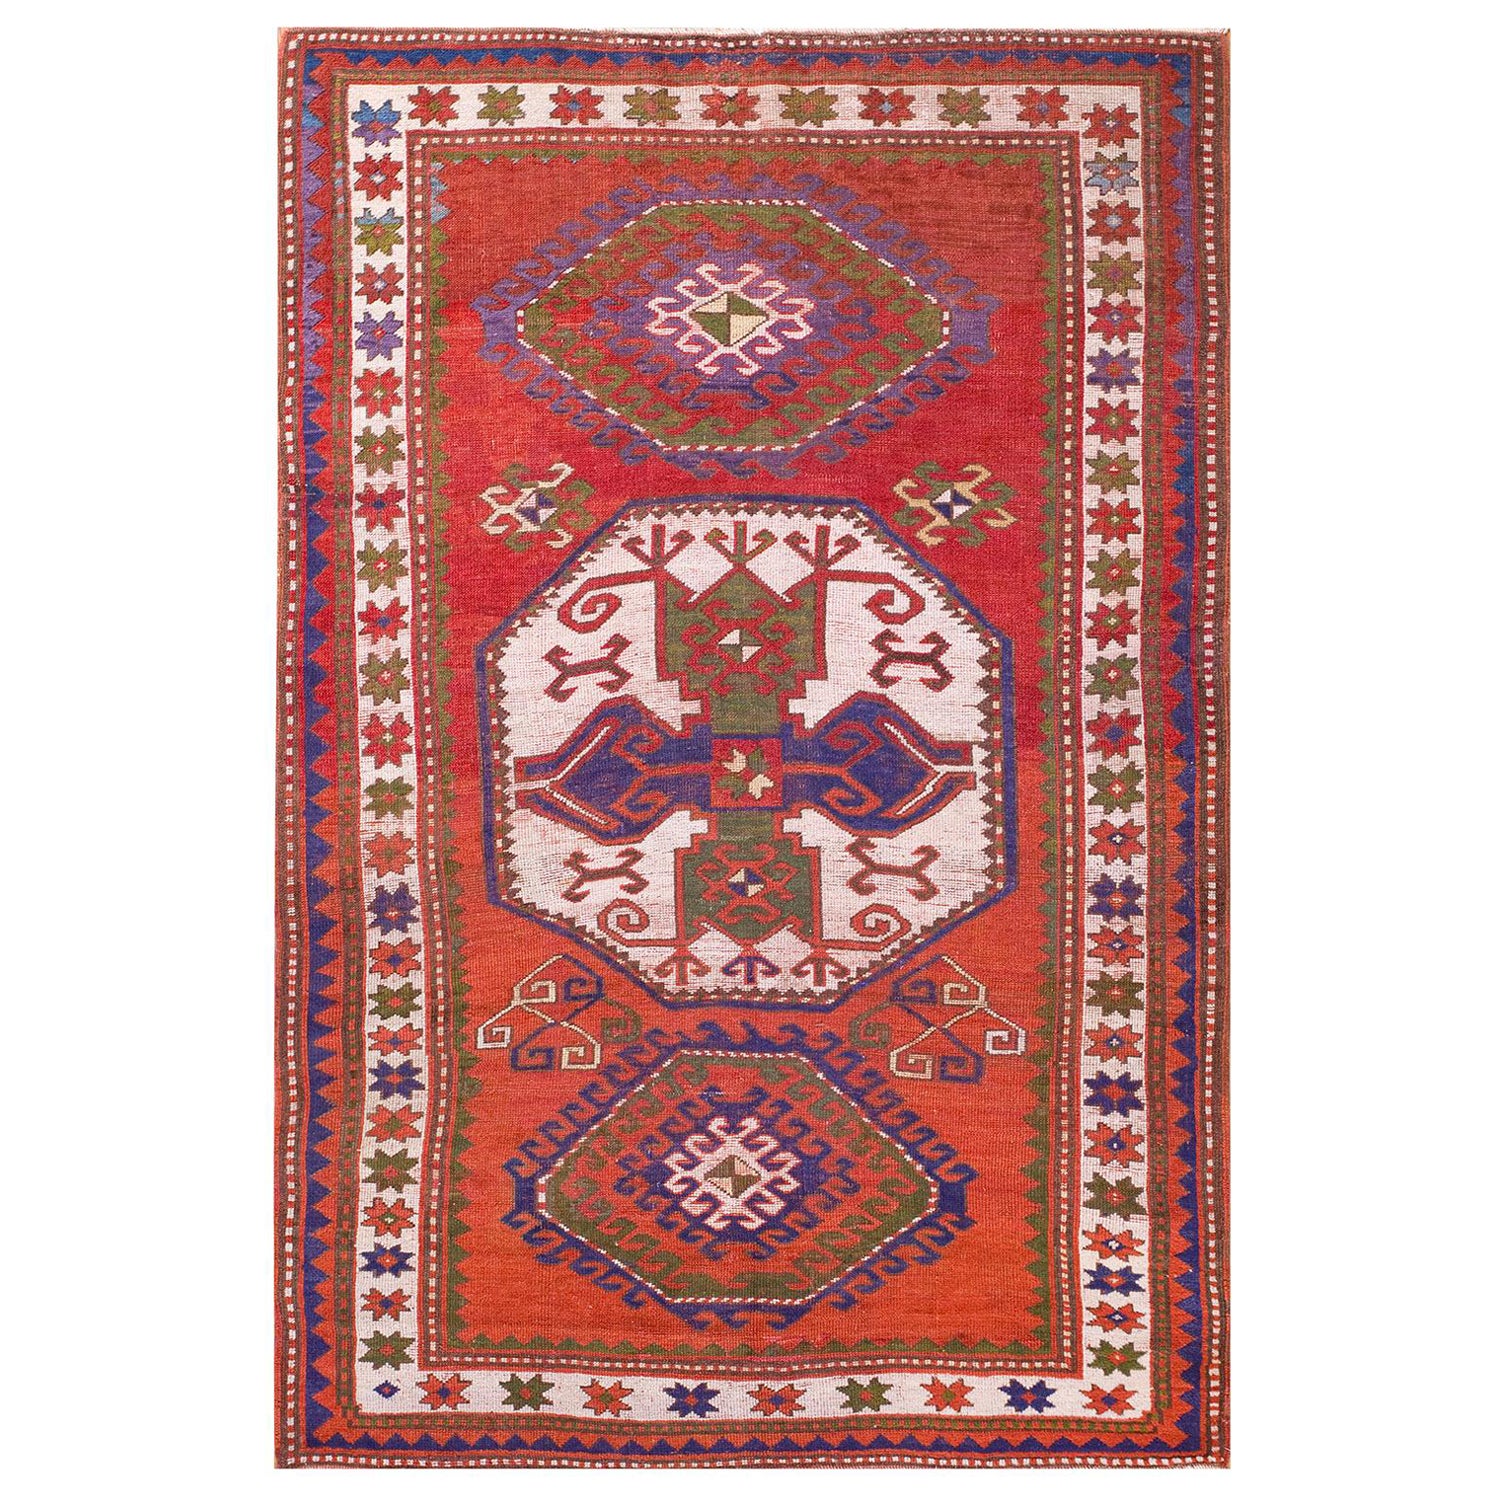 Early 20th Century Caucasian Kazak Lori Pombak Carpet (4'9" x 6'10" - 145 x 208) For Sale